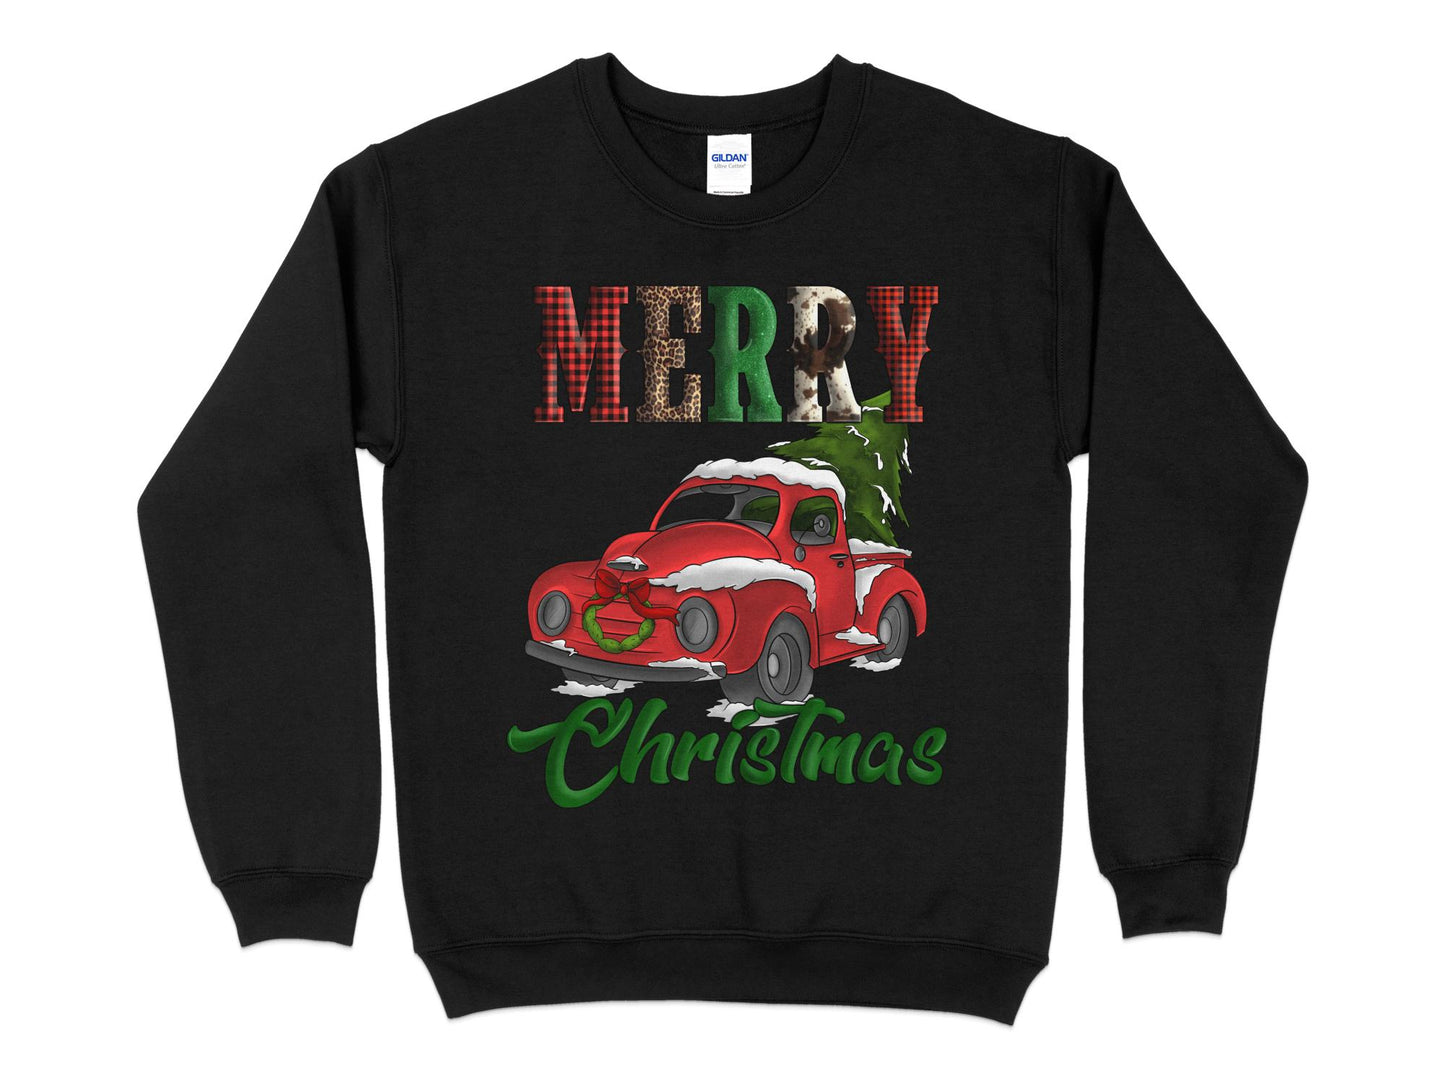 Merry Christmas Red Truck Cow Leopard Buffalo Print Sweatshirt, Christmas Sweater - Mardonyx Sweatshirt S / Black